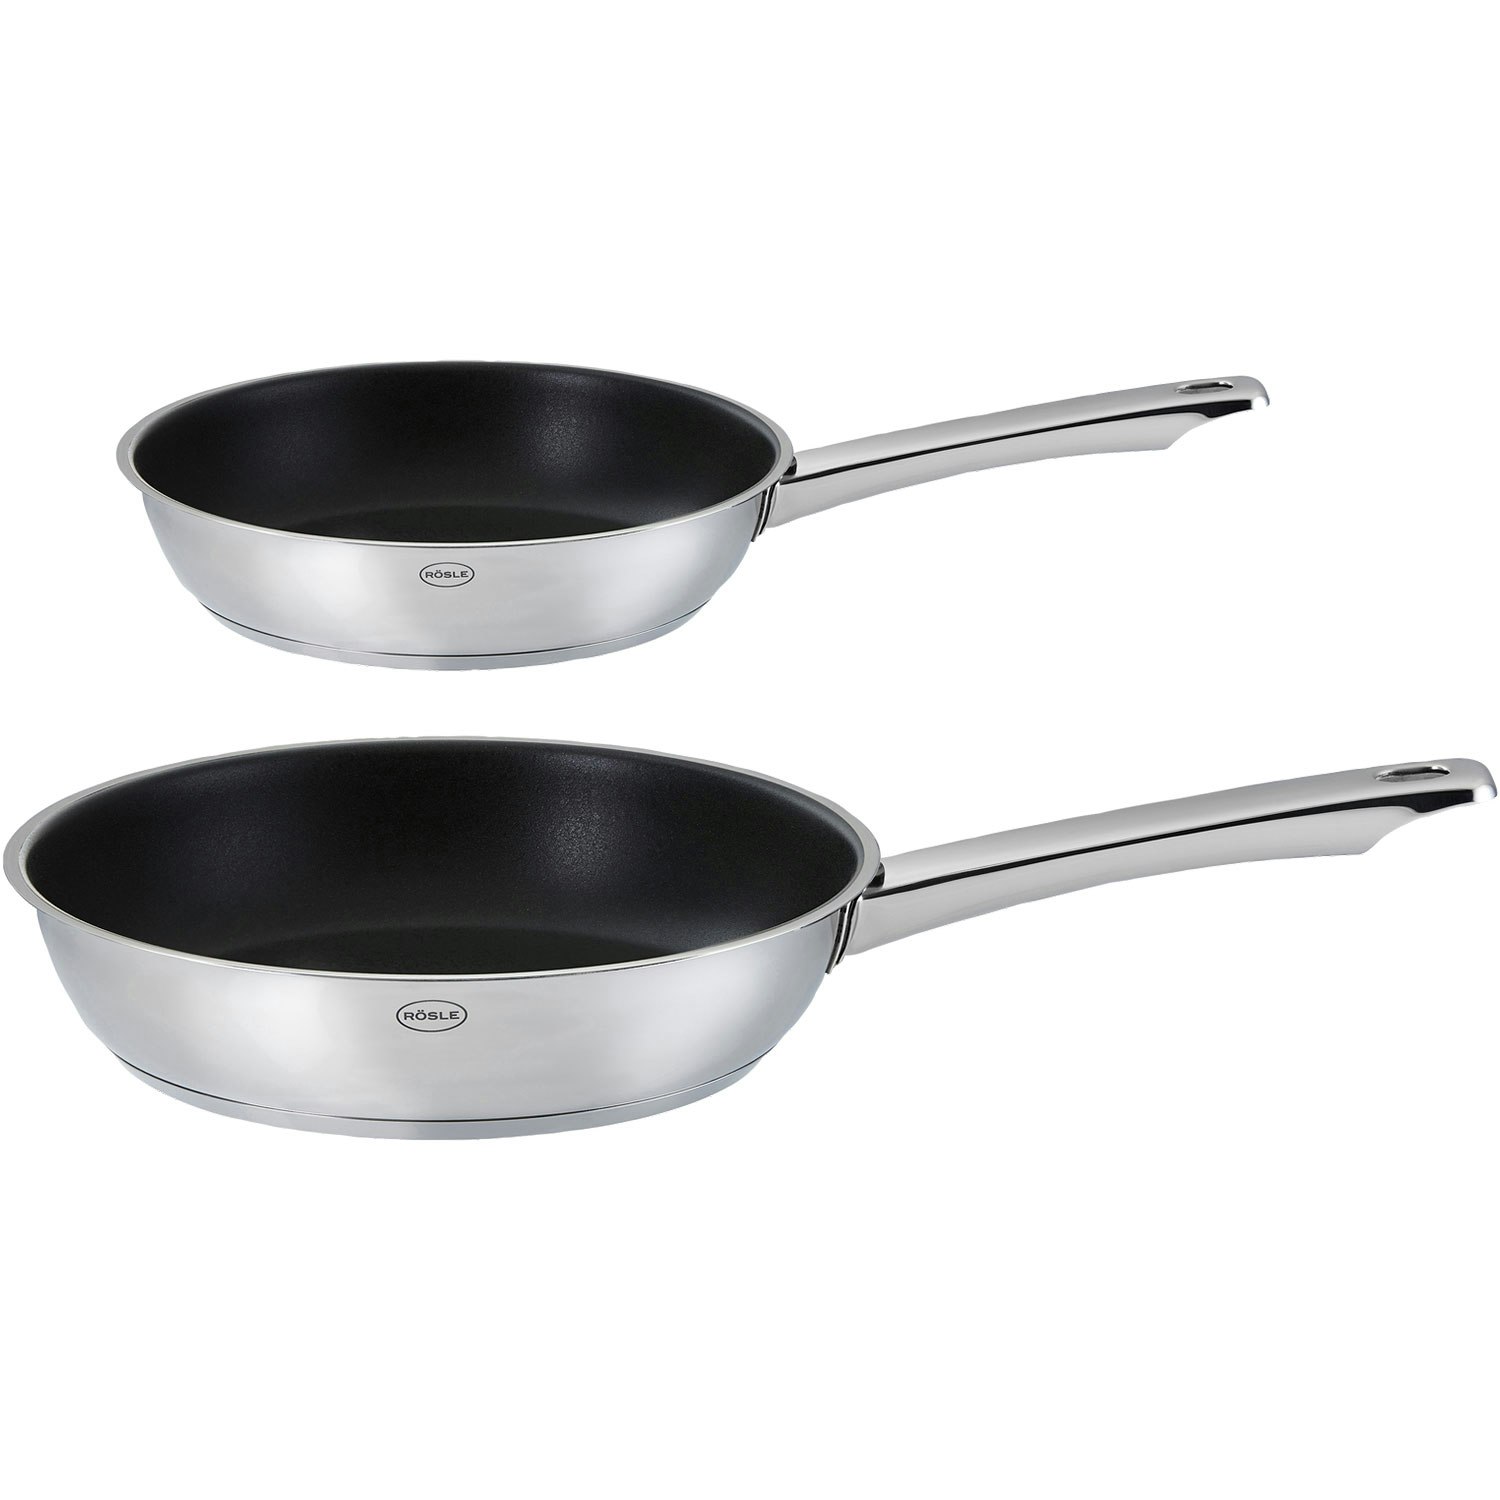 Tefal Frying Pans Set, 20cm and 28cm